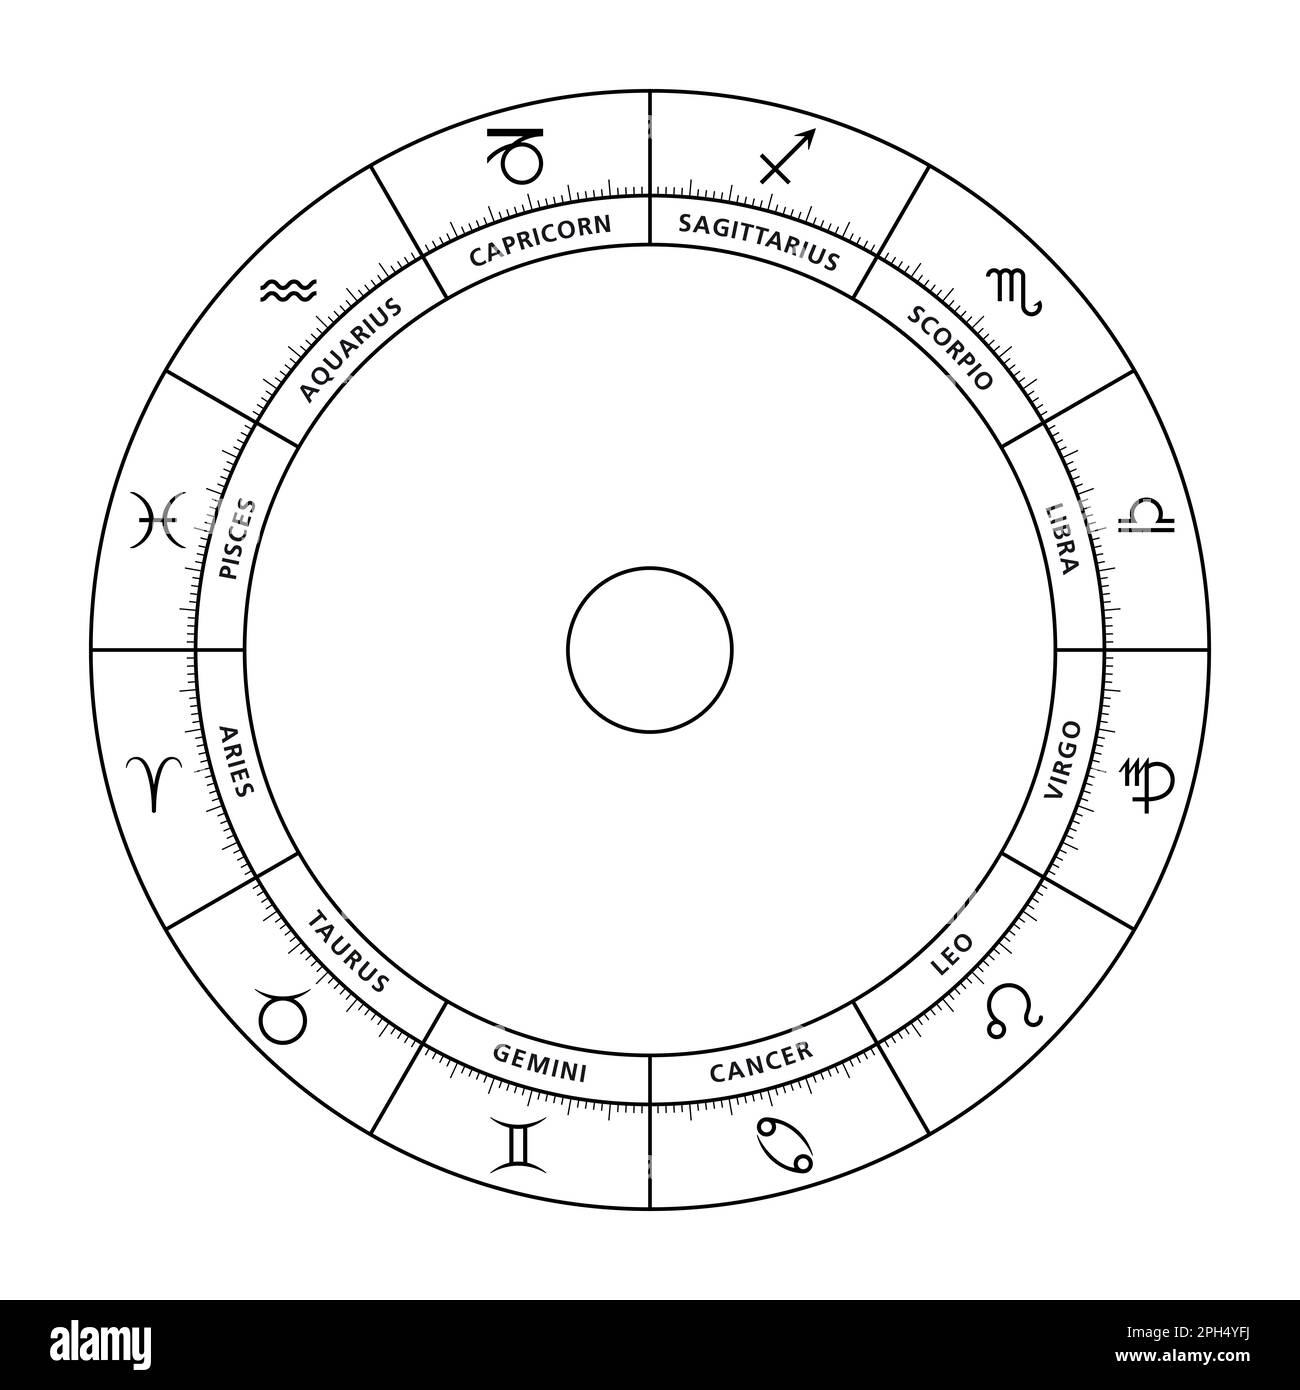 Birth chart of Louis Vuitton - Astrology horoscope